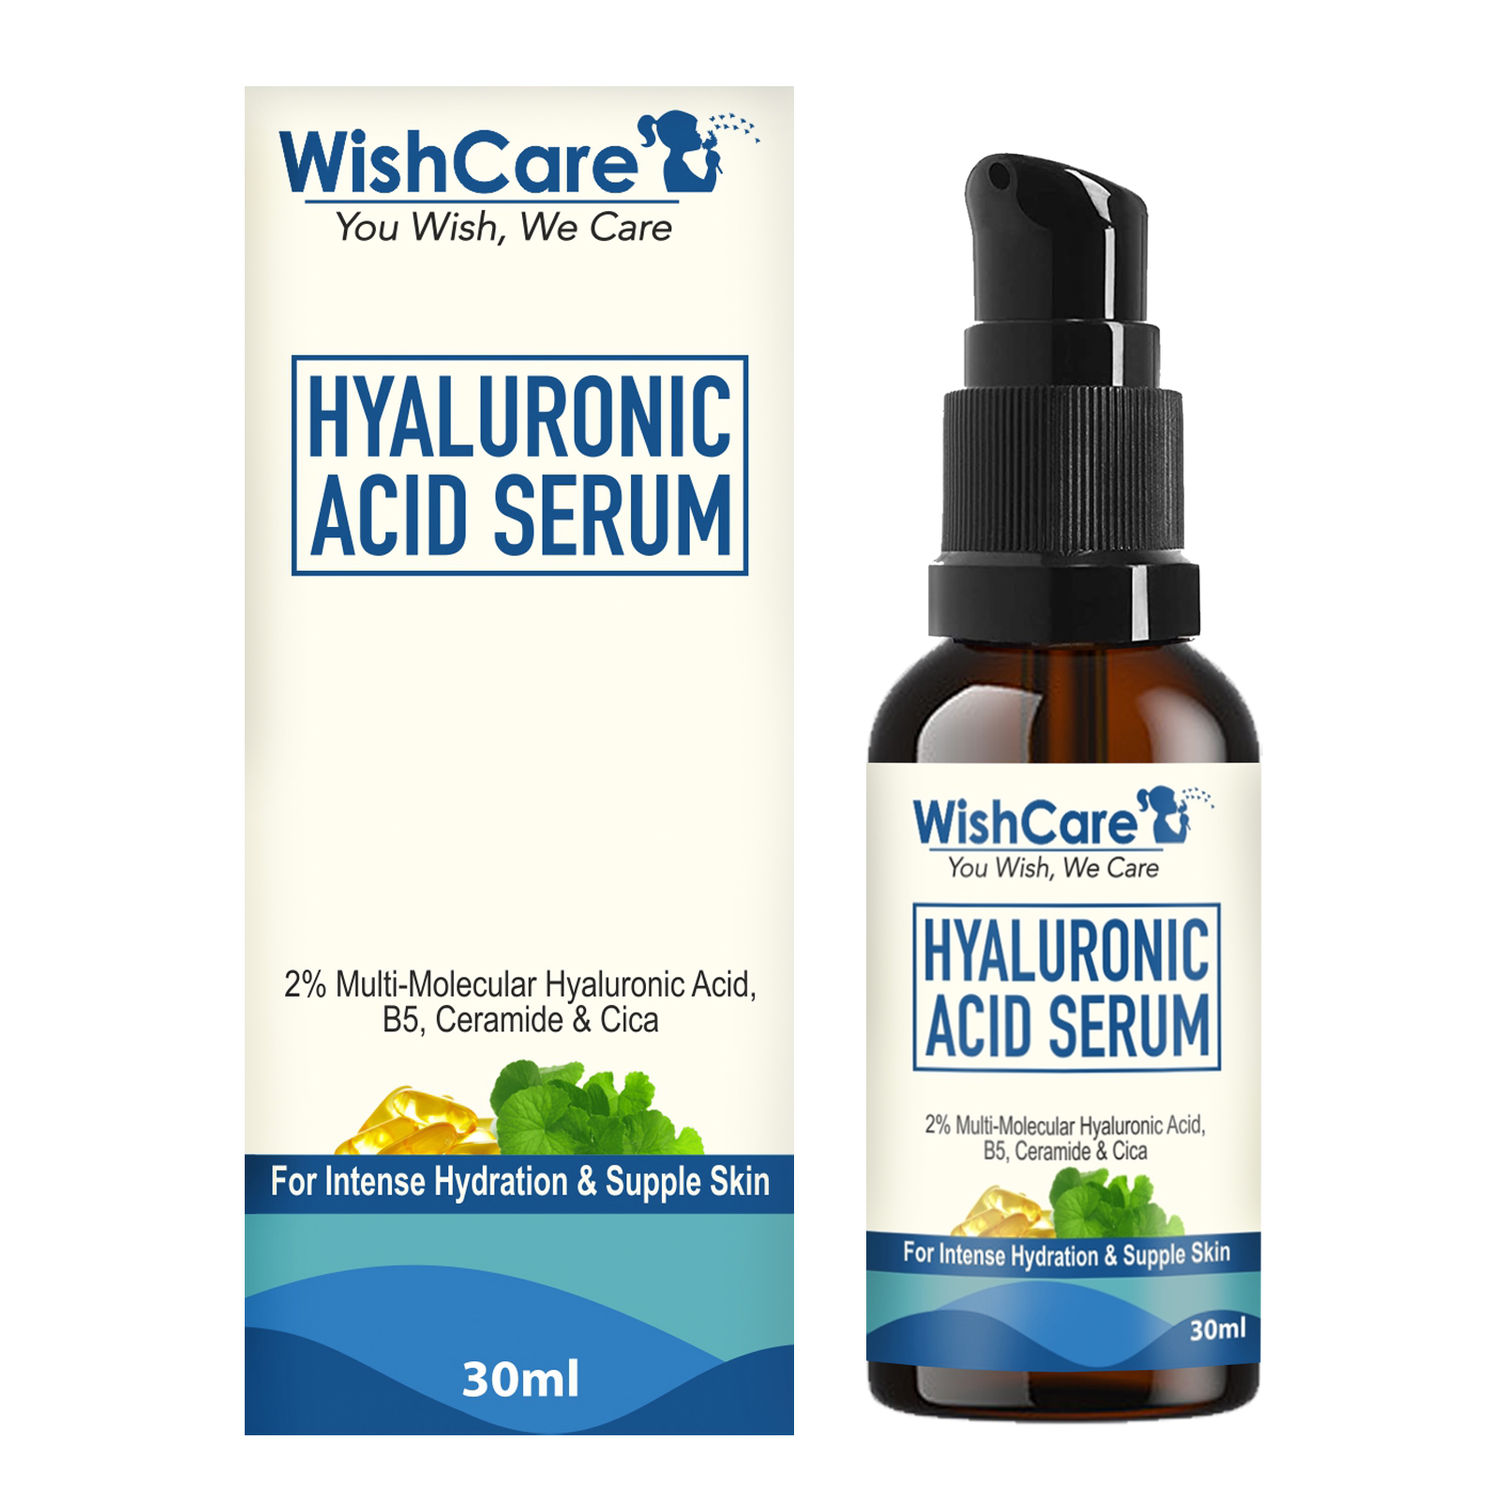 Buy WishCare Hyaluronic Acid Serum with CICA, Ceramide & B5 - Multi-Molecular Hyaluronic Acid Serum - Purplle